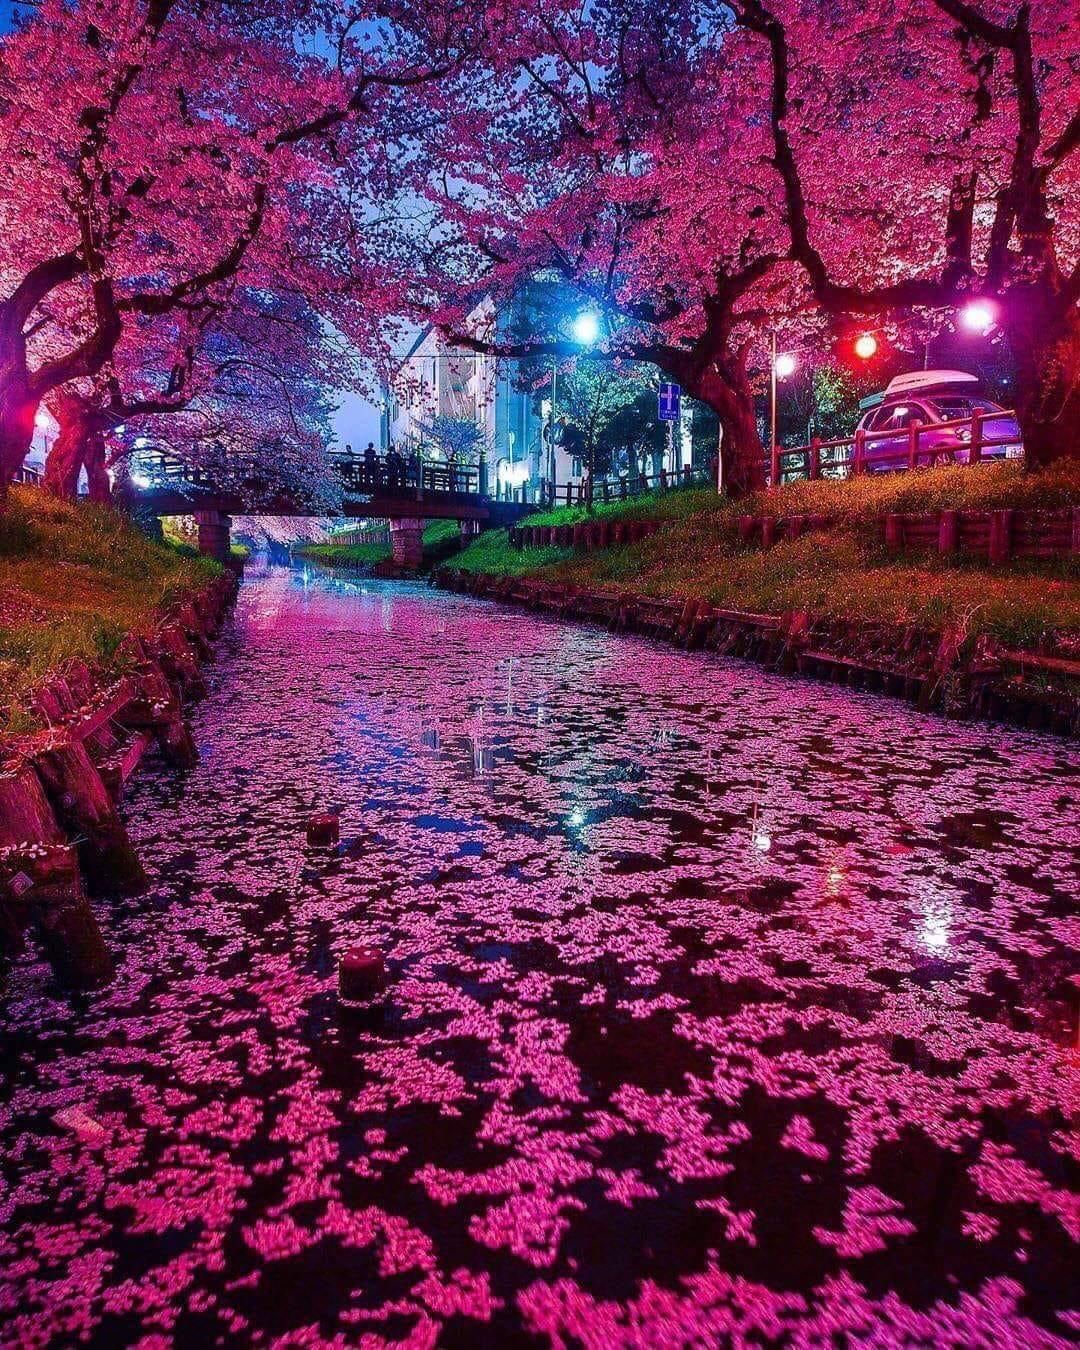 Night Cherry Blossom Wallpapers